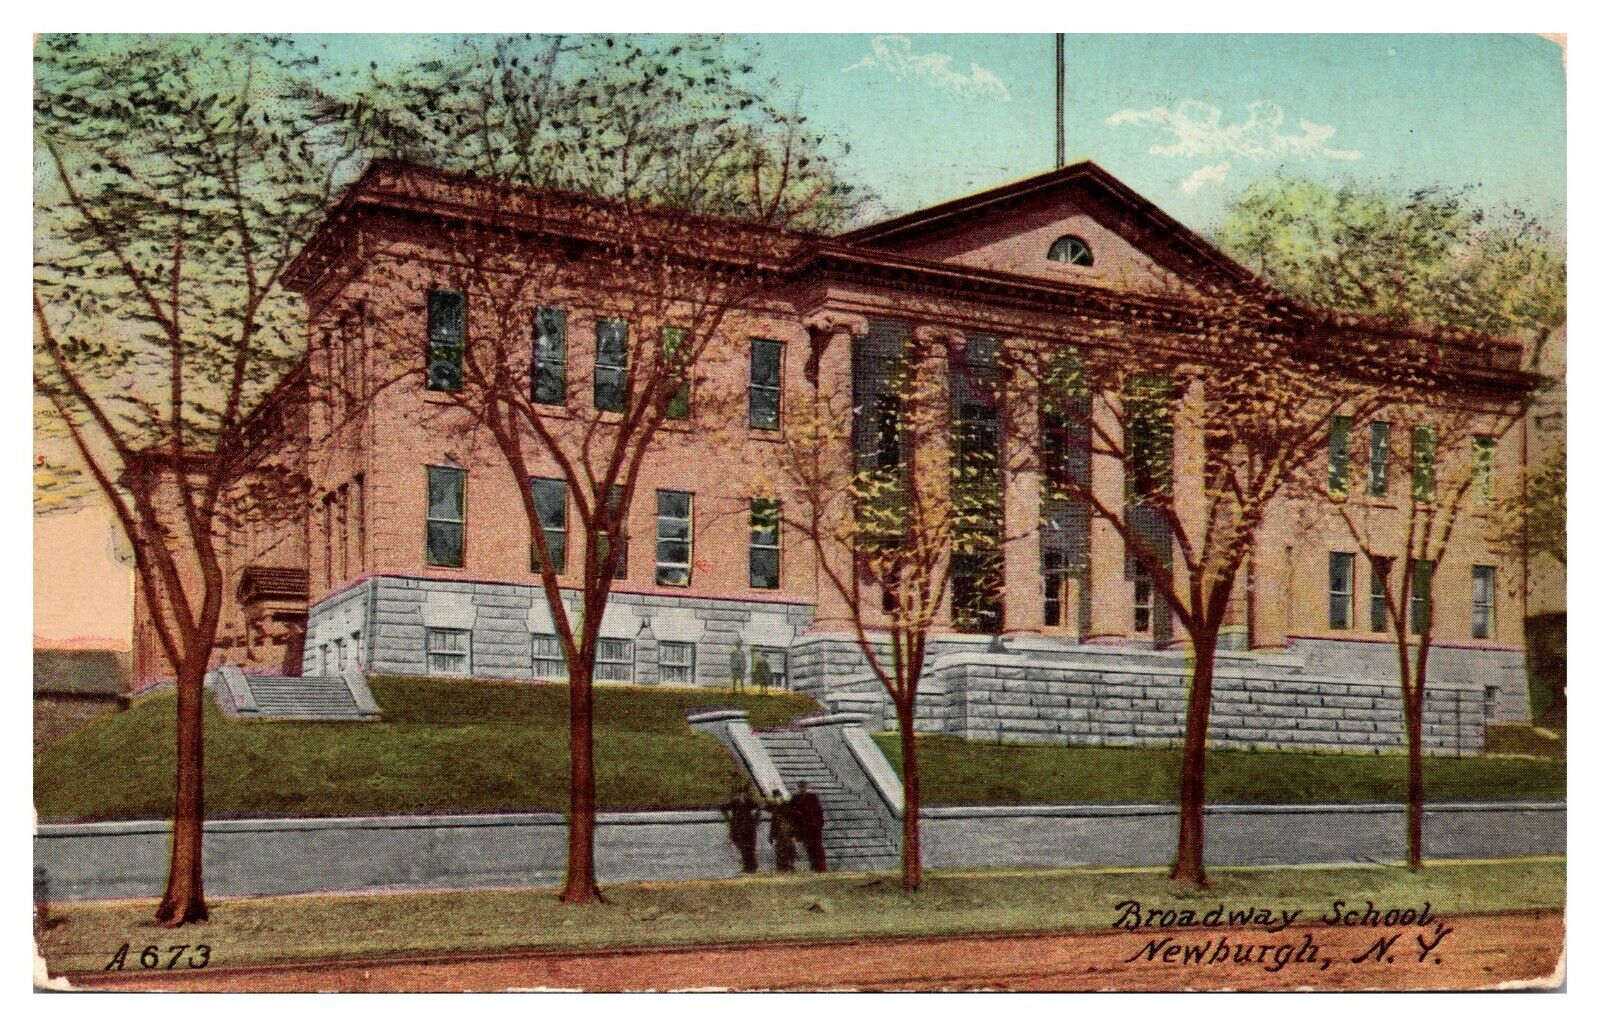 Newburg New York Broadway School 1911 - A54